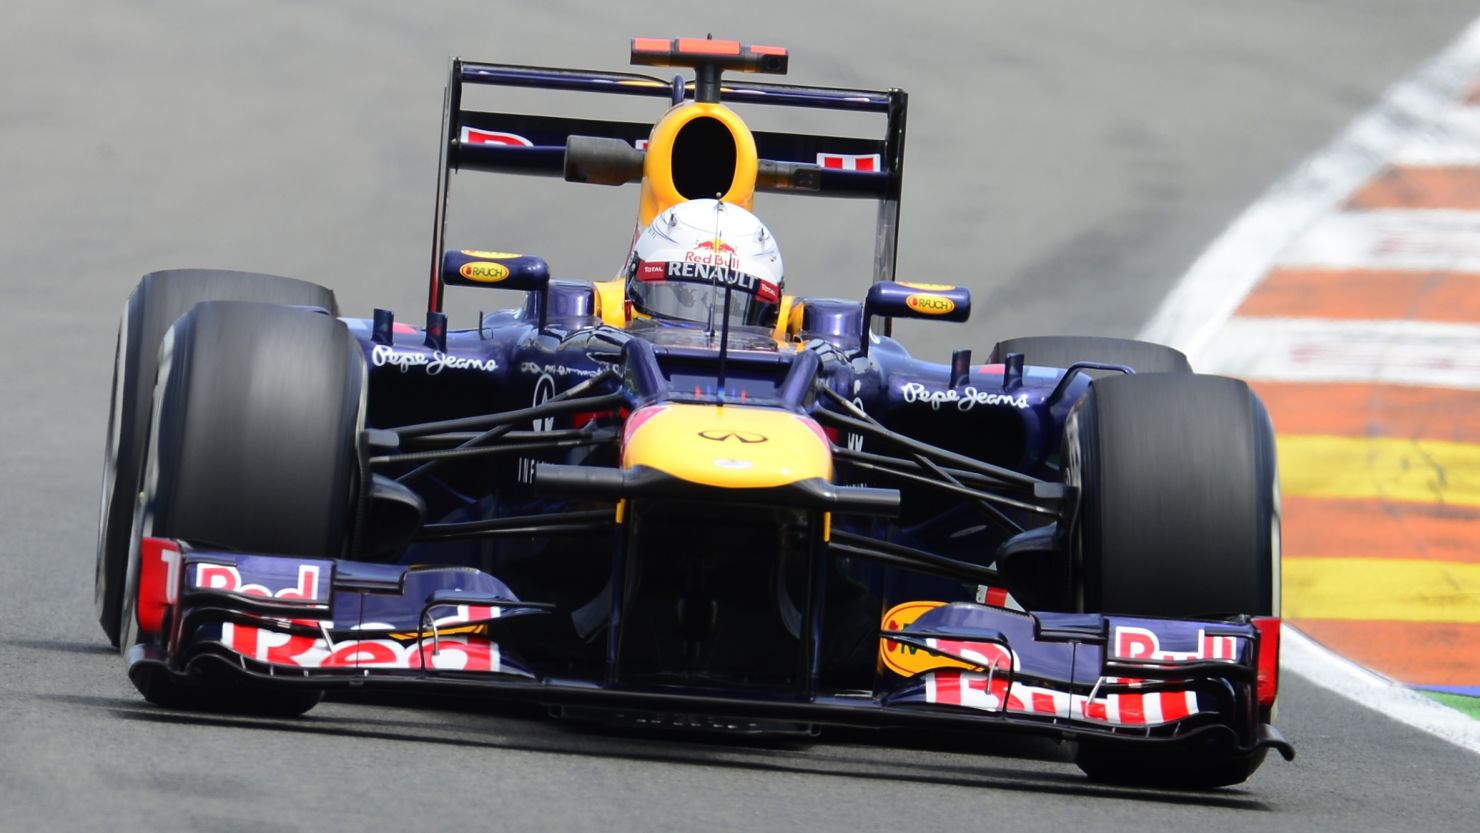 Red Bull's Sebastian Vettel took victory at the Bahrain Grand Prix in April.